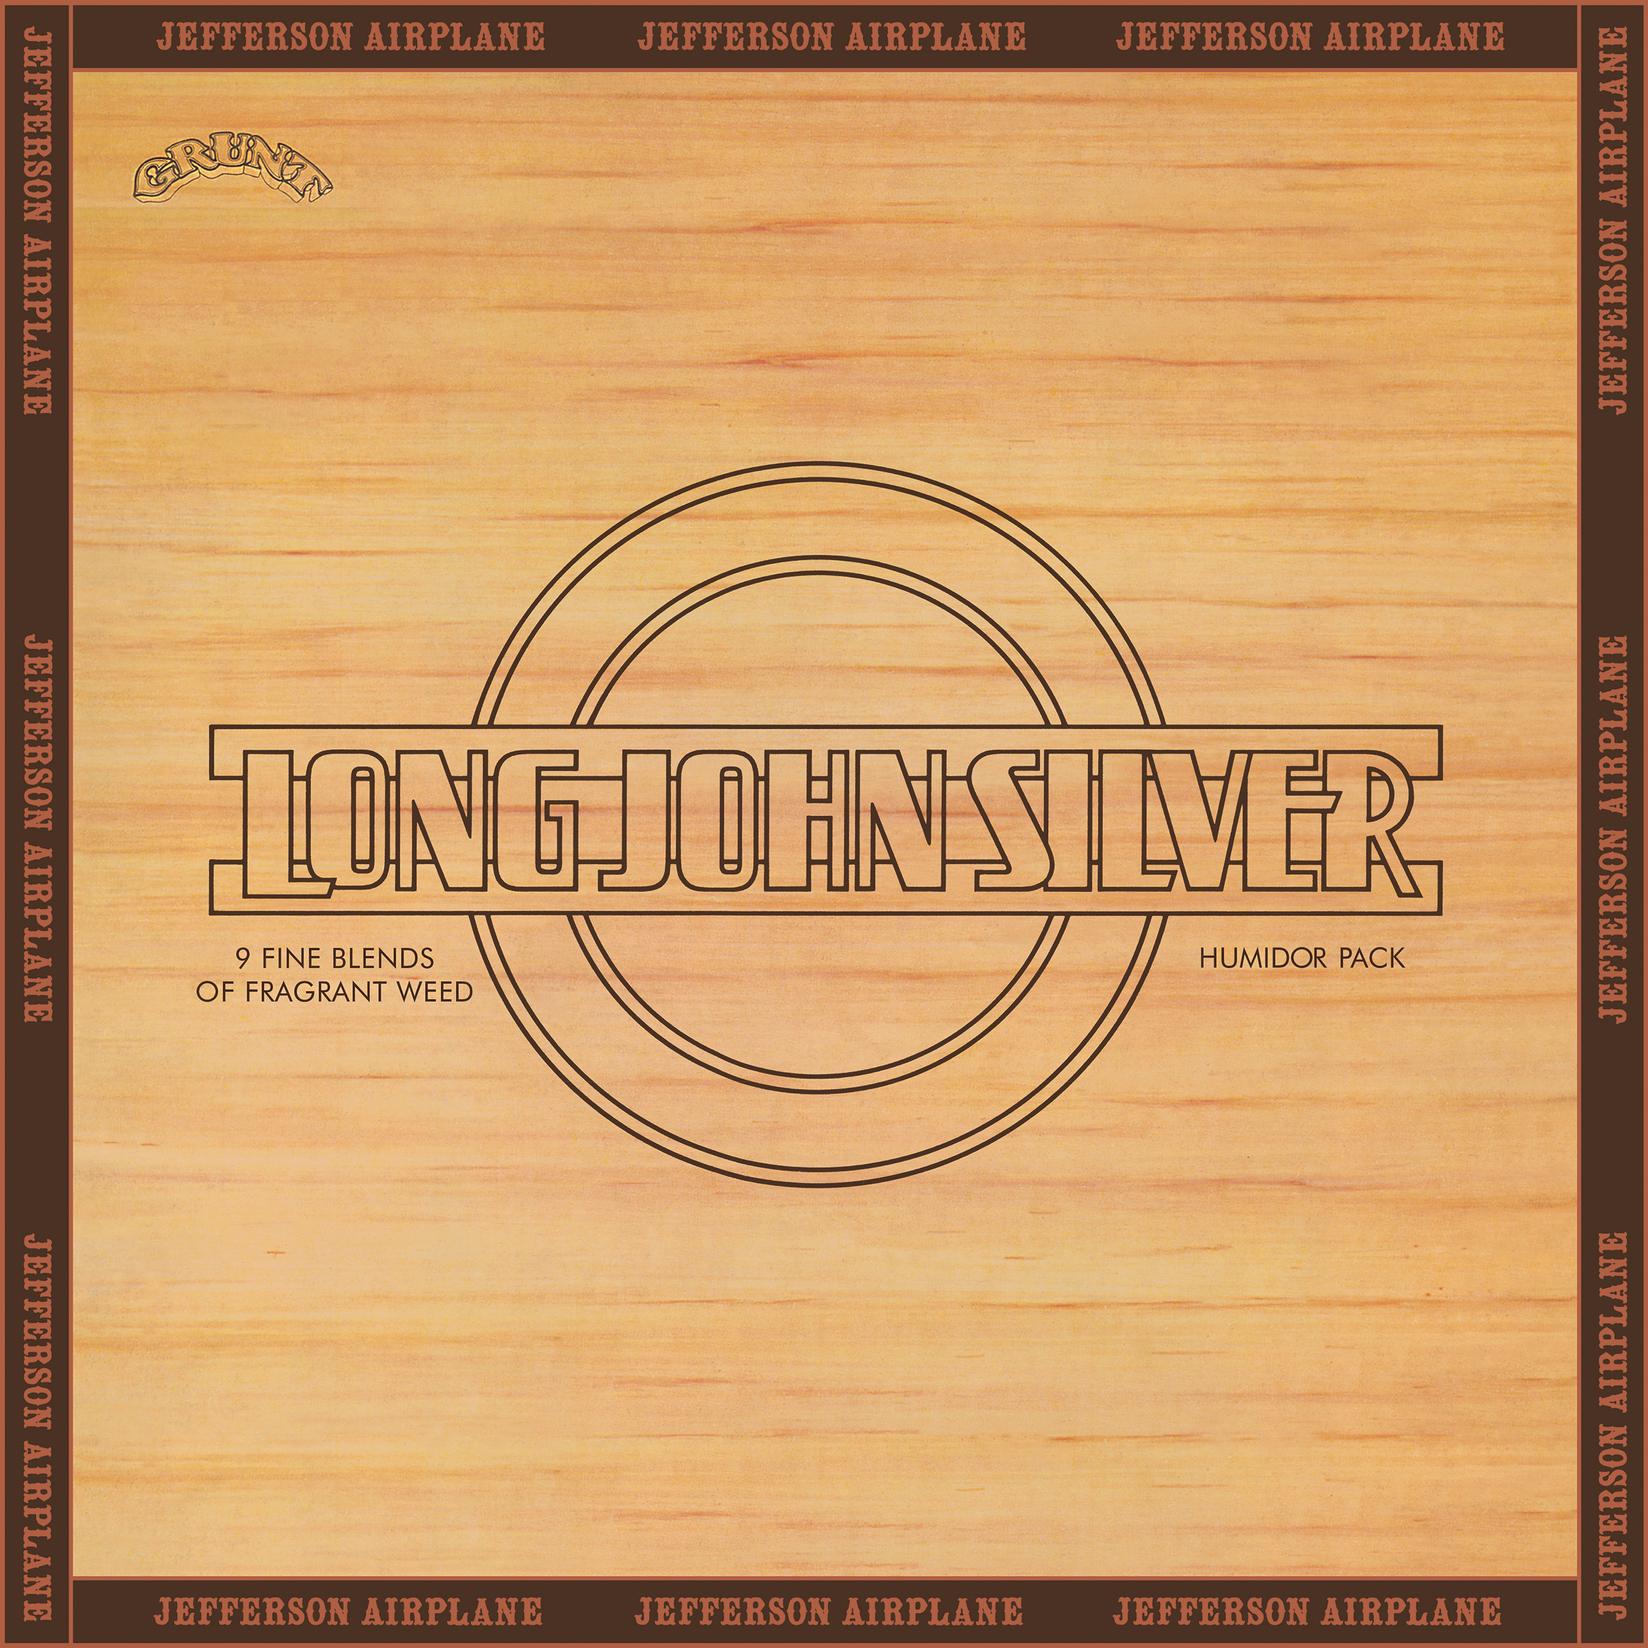 JEFFERSON AIRPLANE - Long John Silver (Limited) (Dark green vinyl)